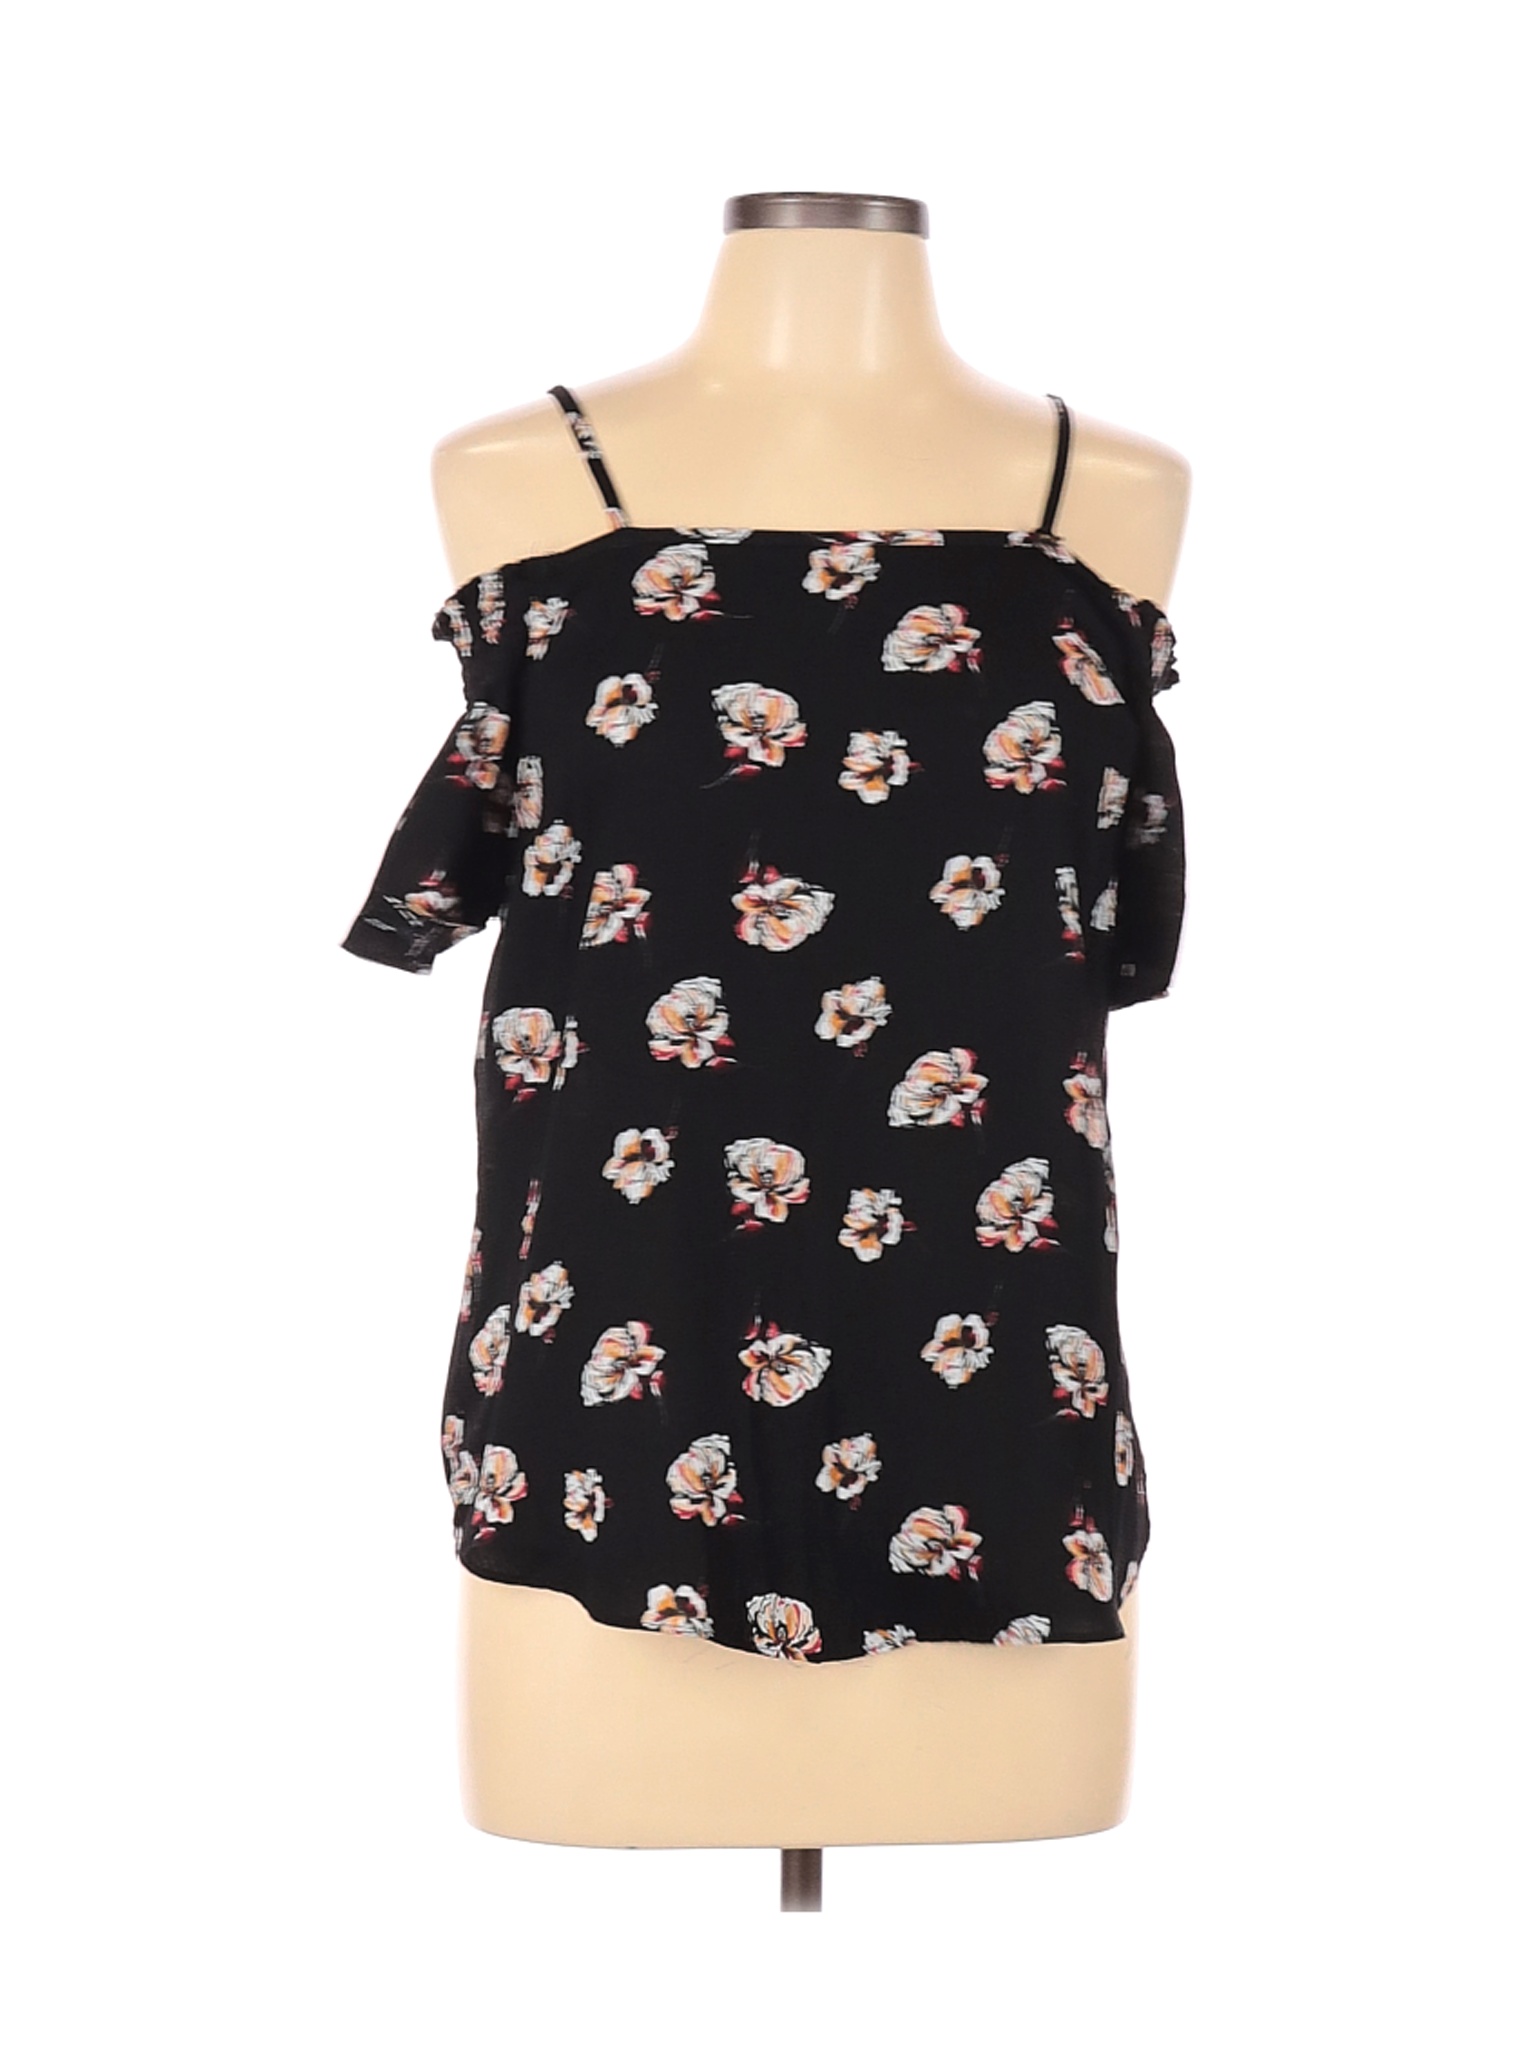 Papermoon Women Black Short Sleeve Blouse L | eBay